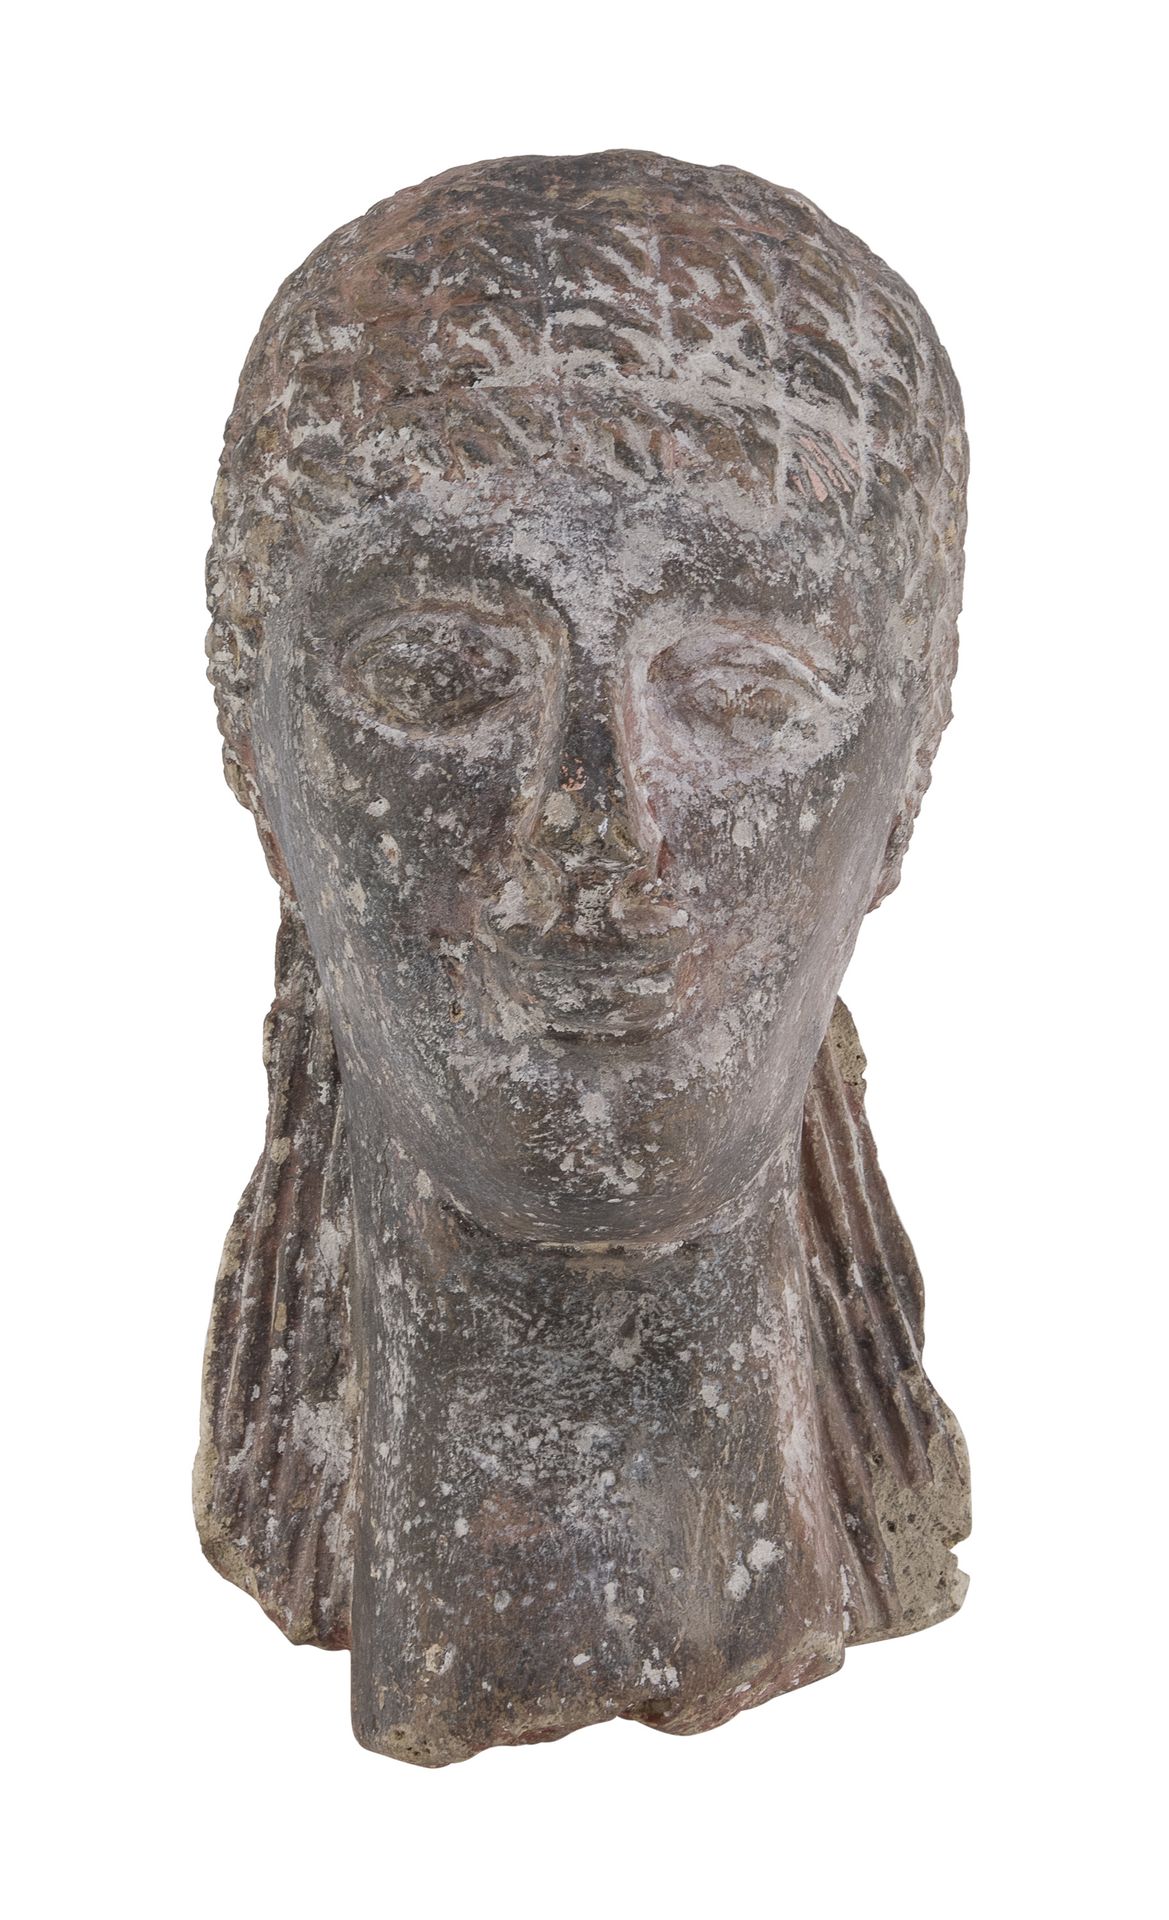 Null 复合材料的头部，埃特鲁斯坎风格，20世纪

在红色和灰色的螺栓中，描绘了具有典型头发的神灵。

尺寸为27 x 14 x 18厘米。